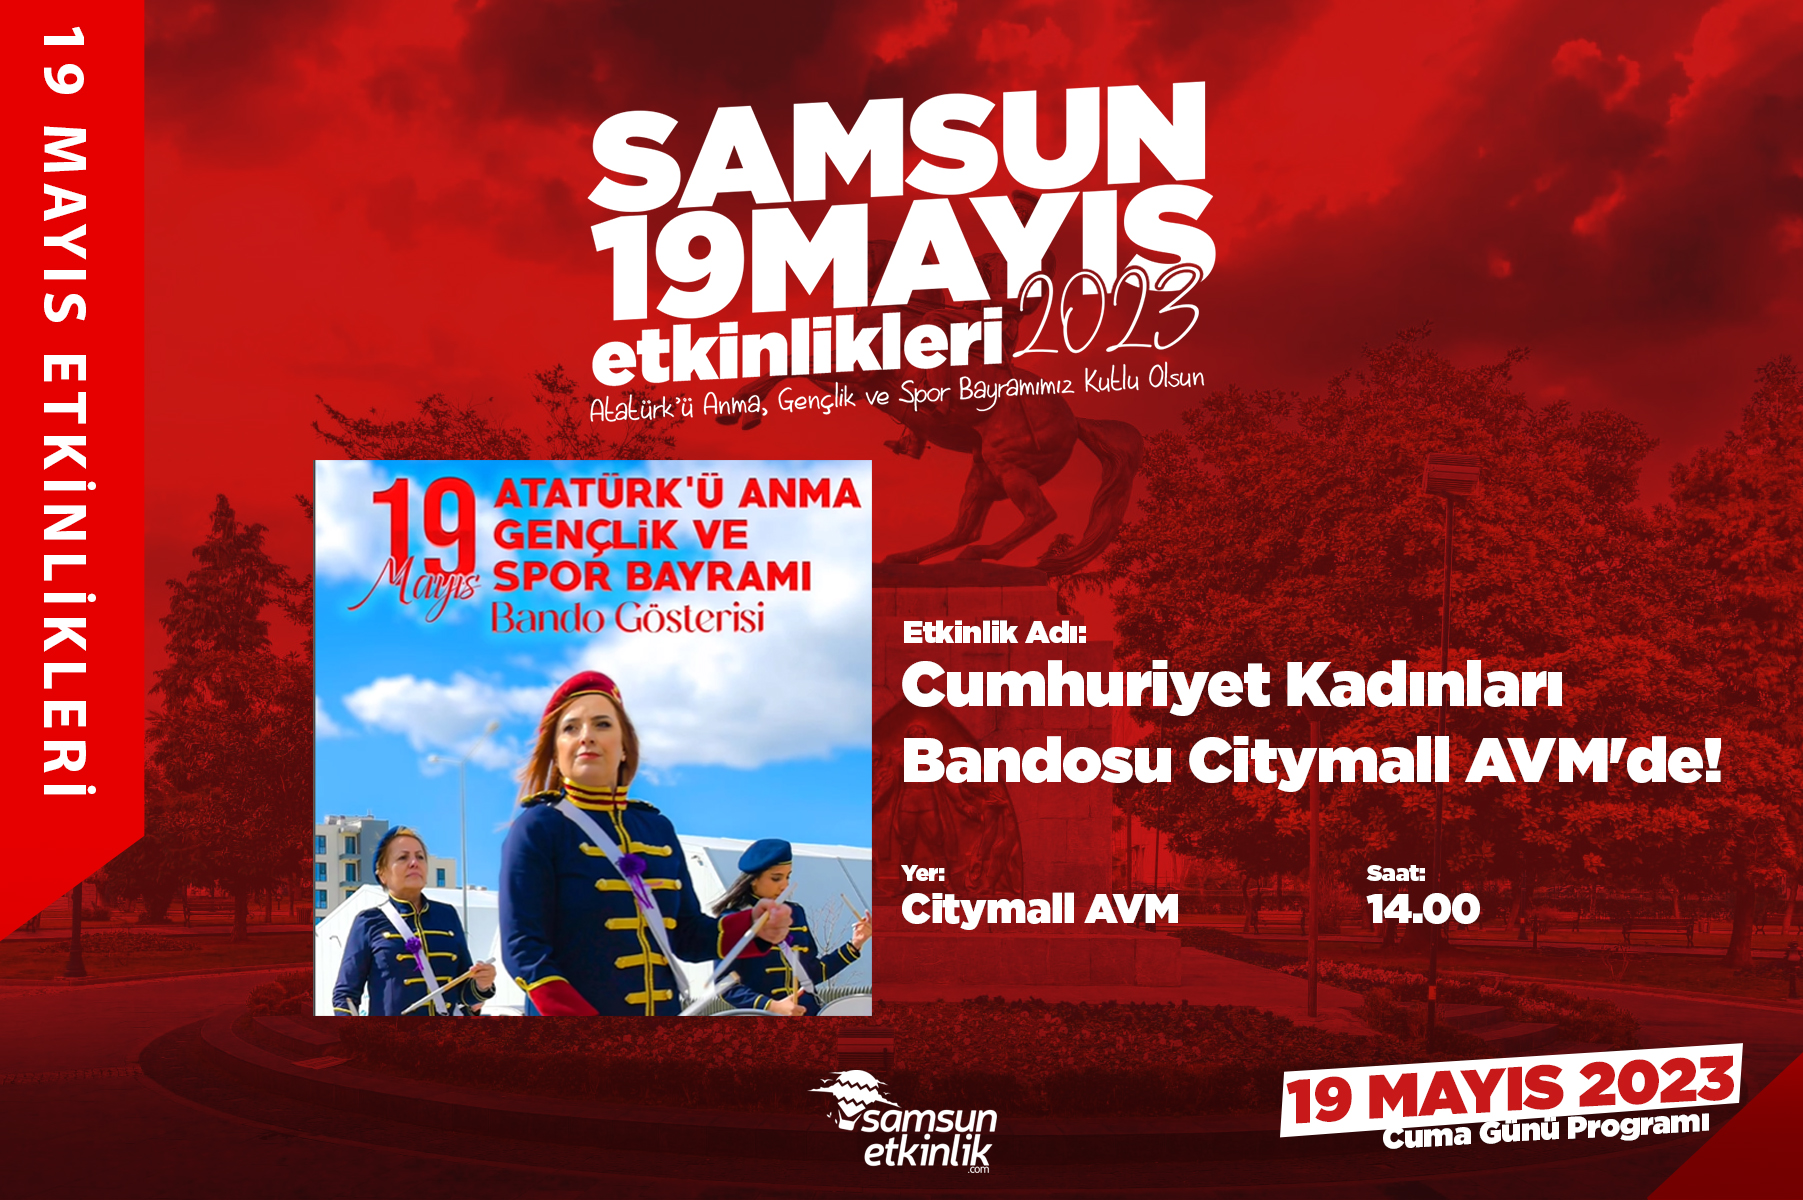 Cumhuriyet Kadınları Bandosu Citymall AVM'de!